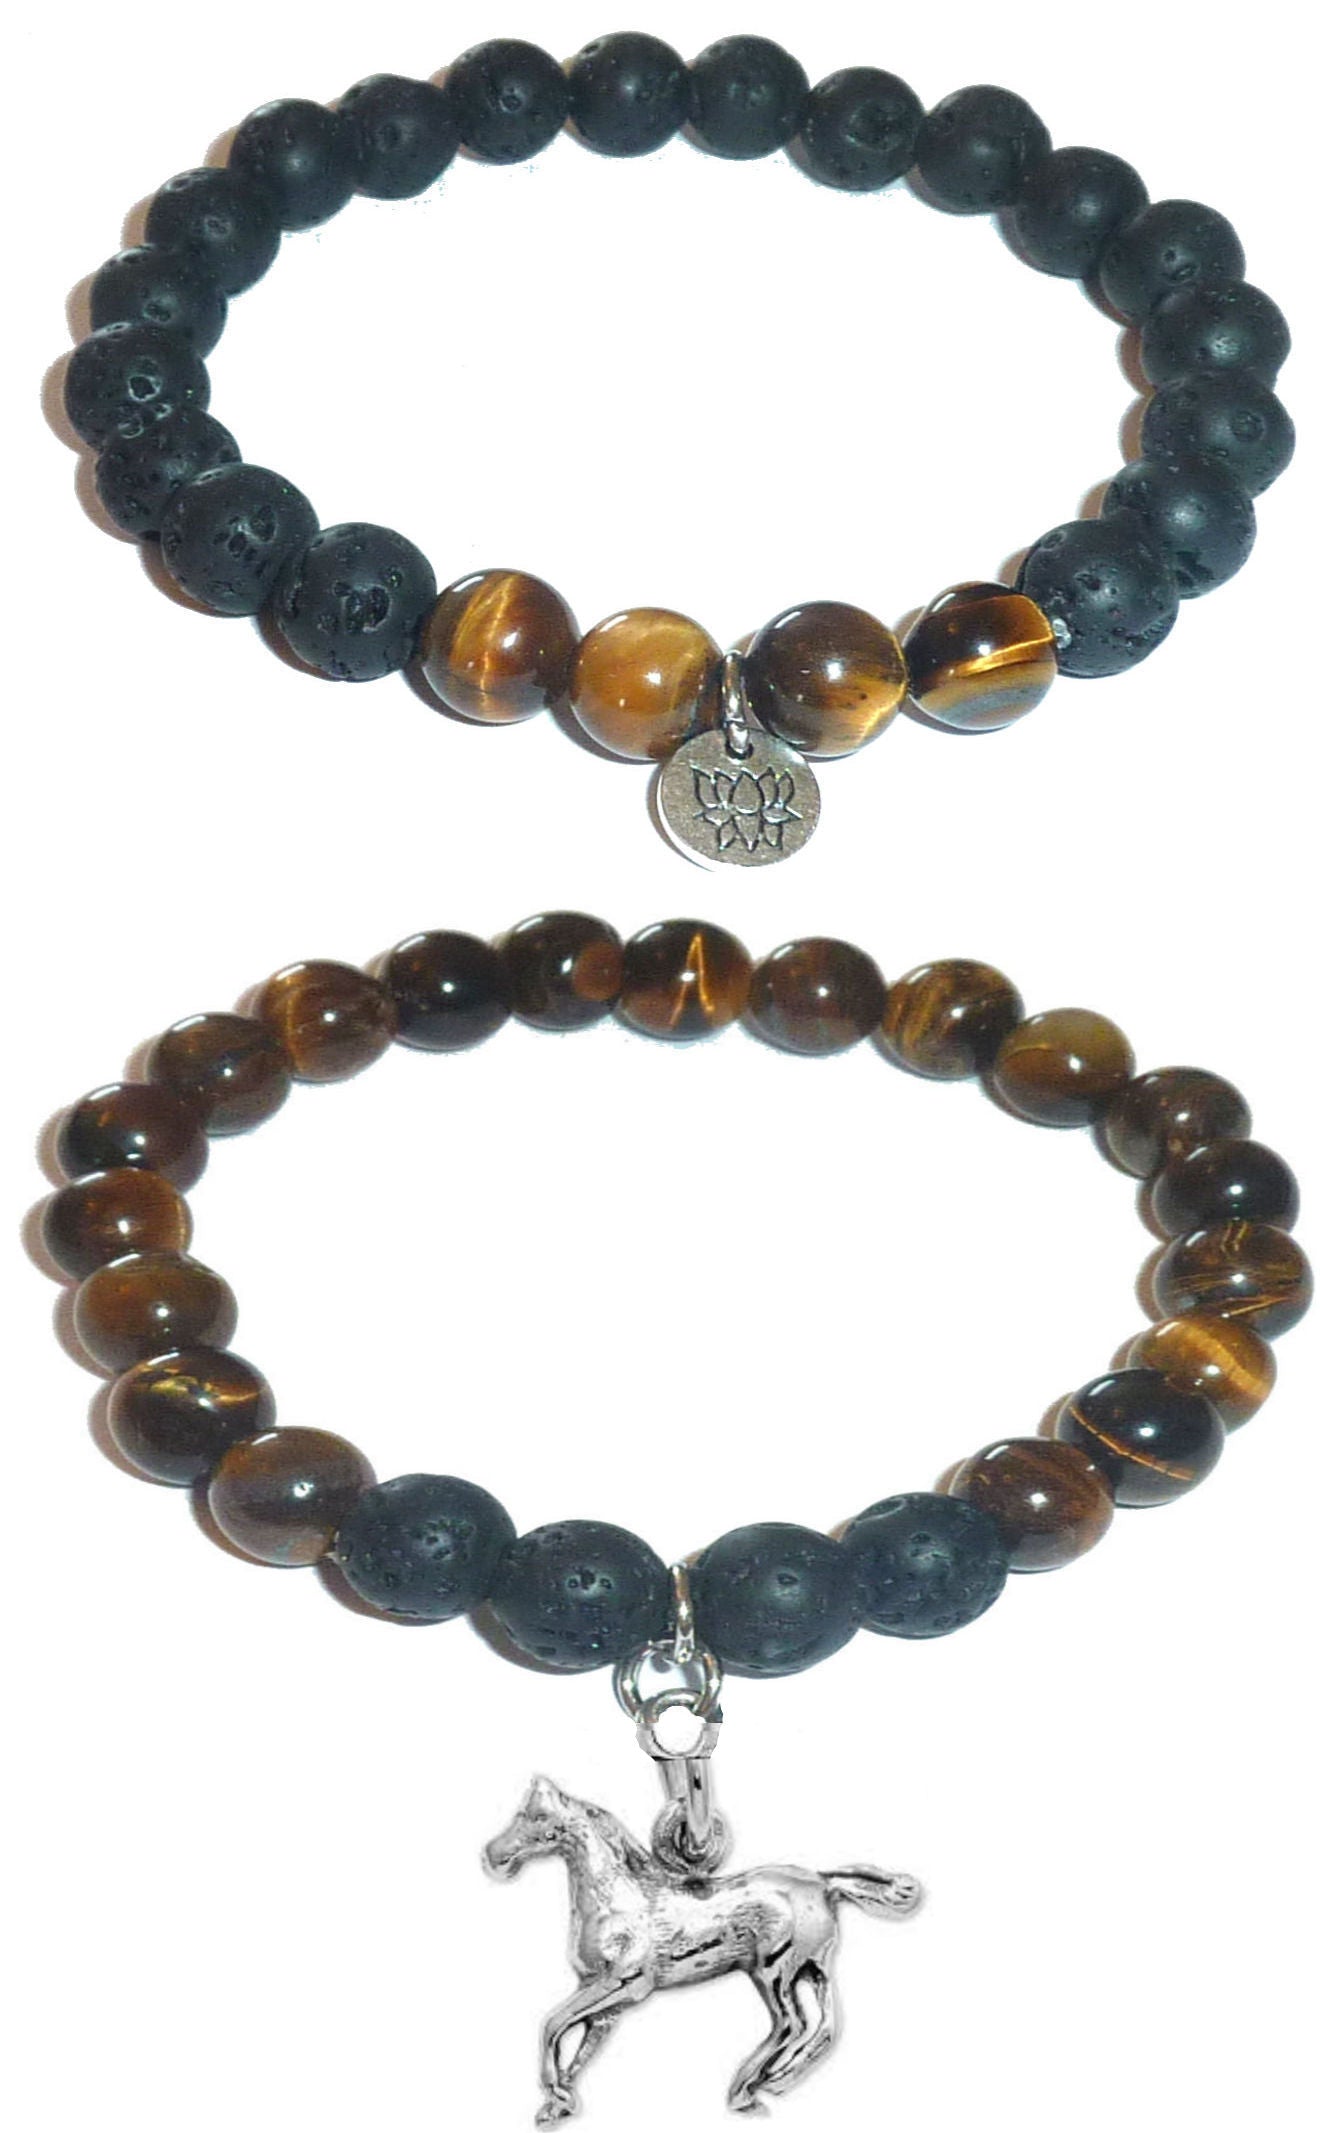 Horse - Women's Tiger Eye & Black Lava Diffuser Yoga Beads Charm Stretch Bracelet Gift Set